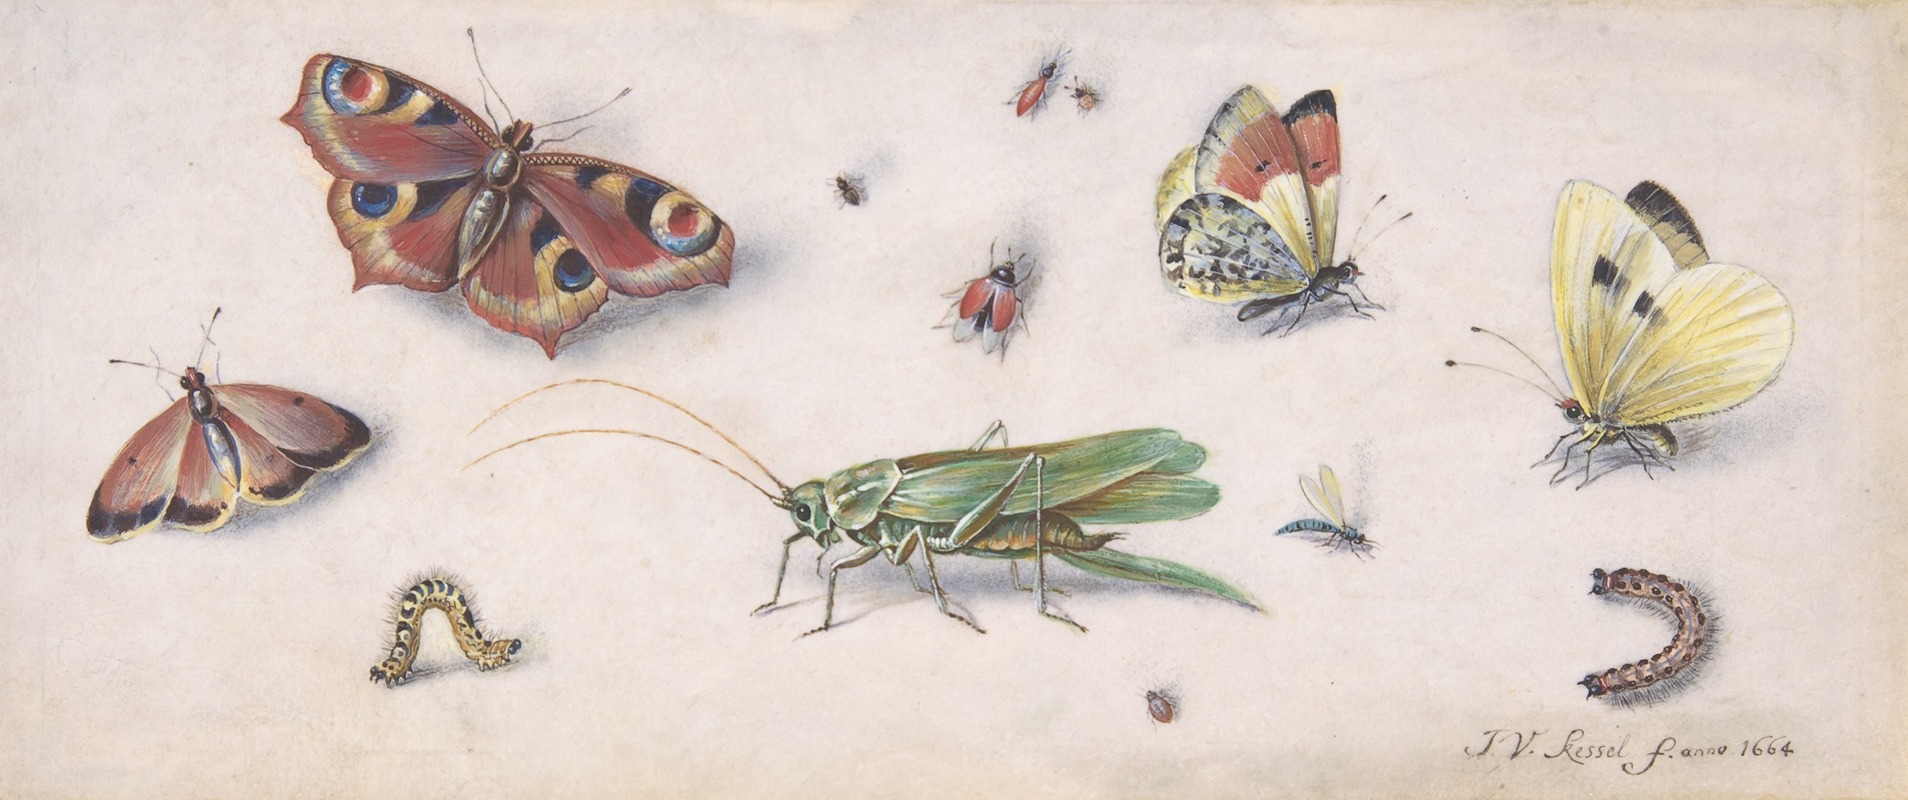 Jan Van Kessel The Elder - Insects, Butterflies, and a Grasshopper